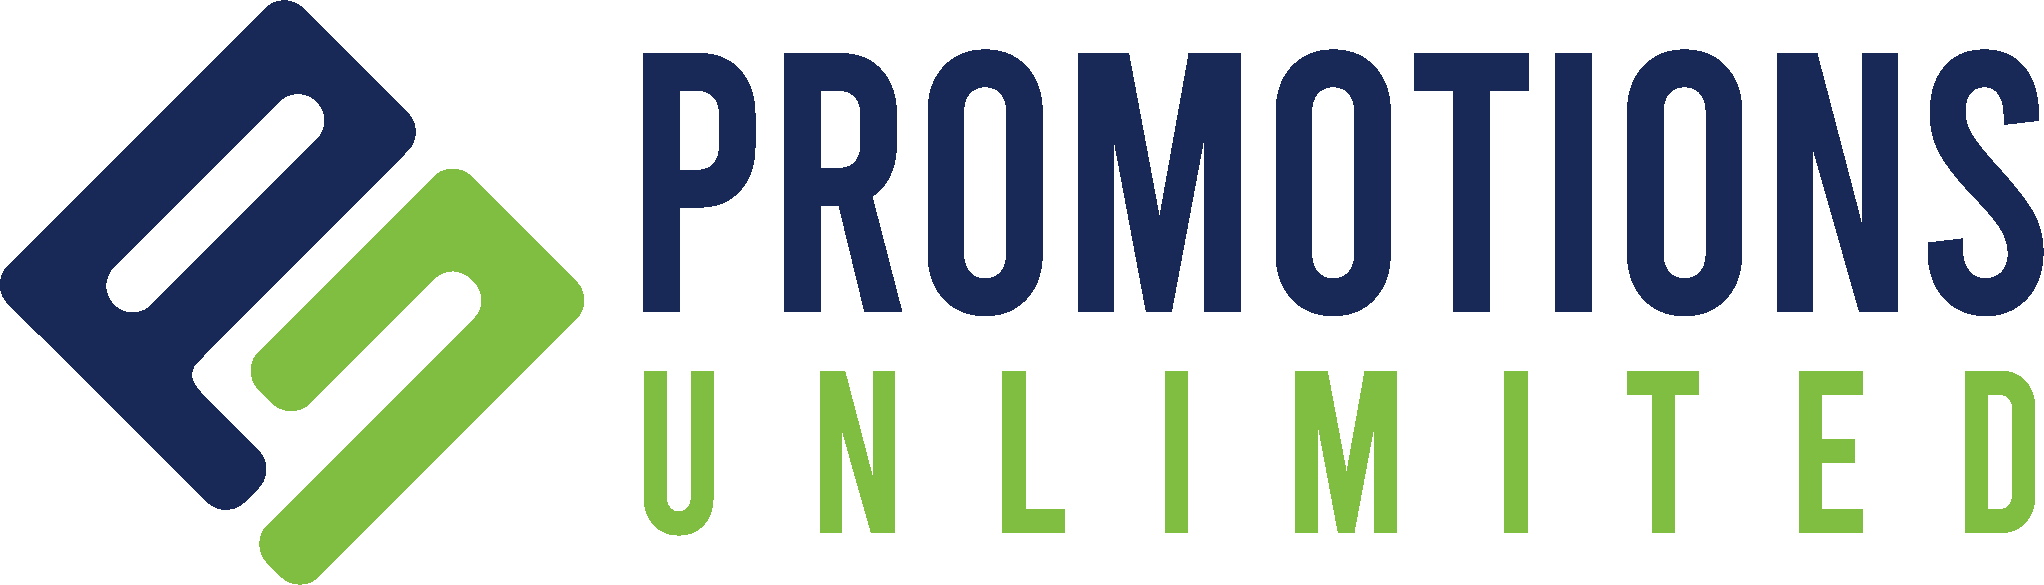 Promotions Unlimited LLC's Logo